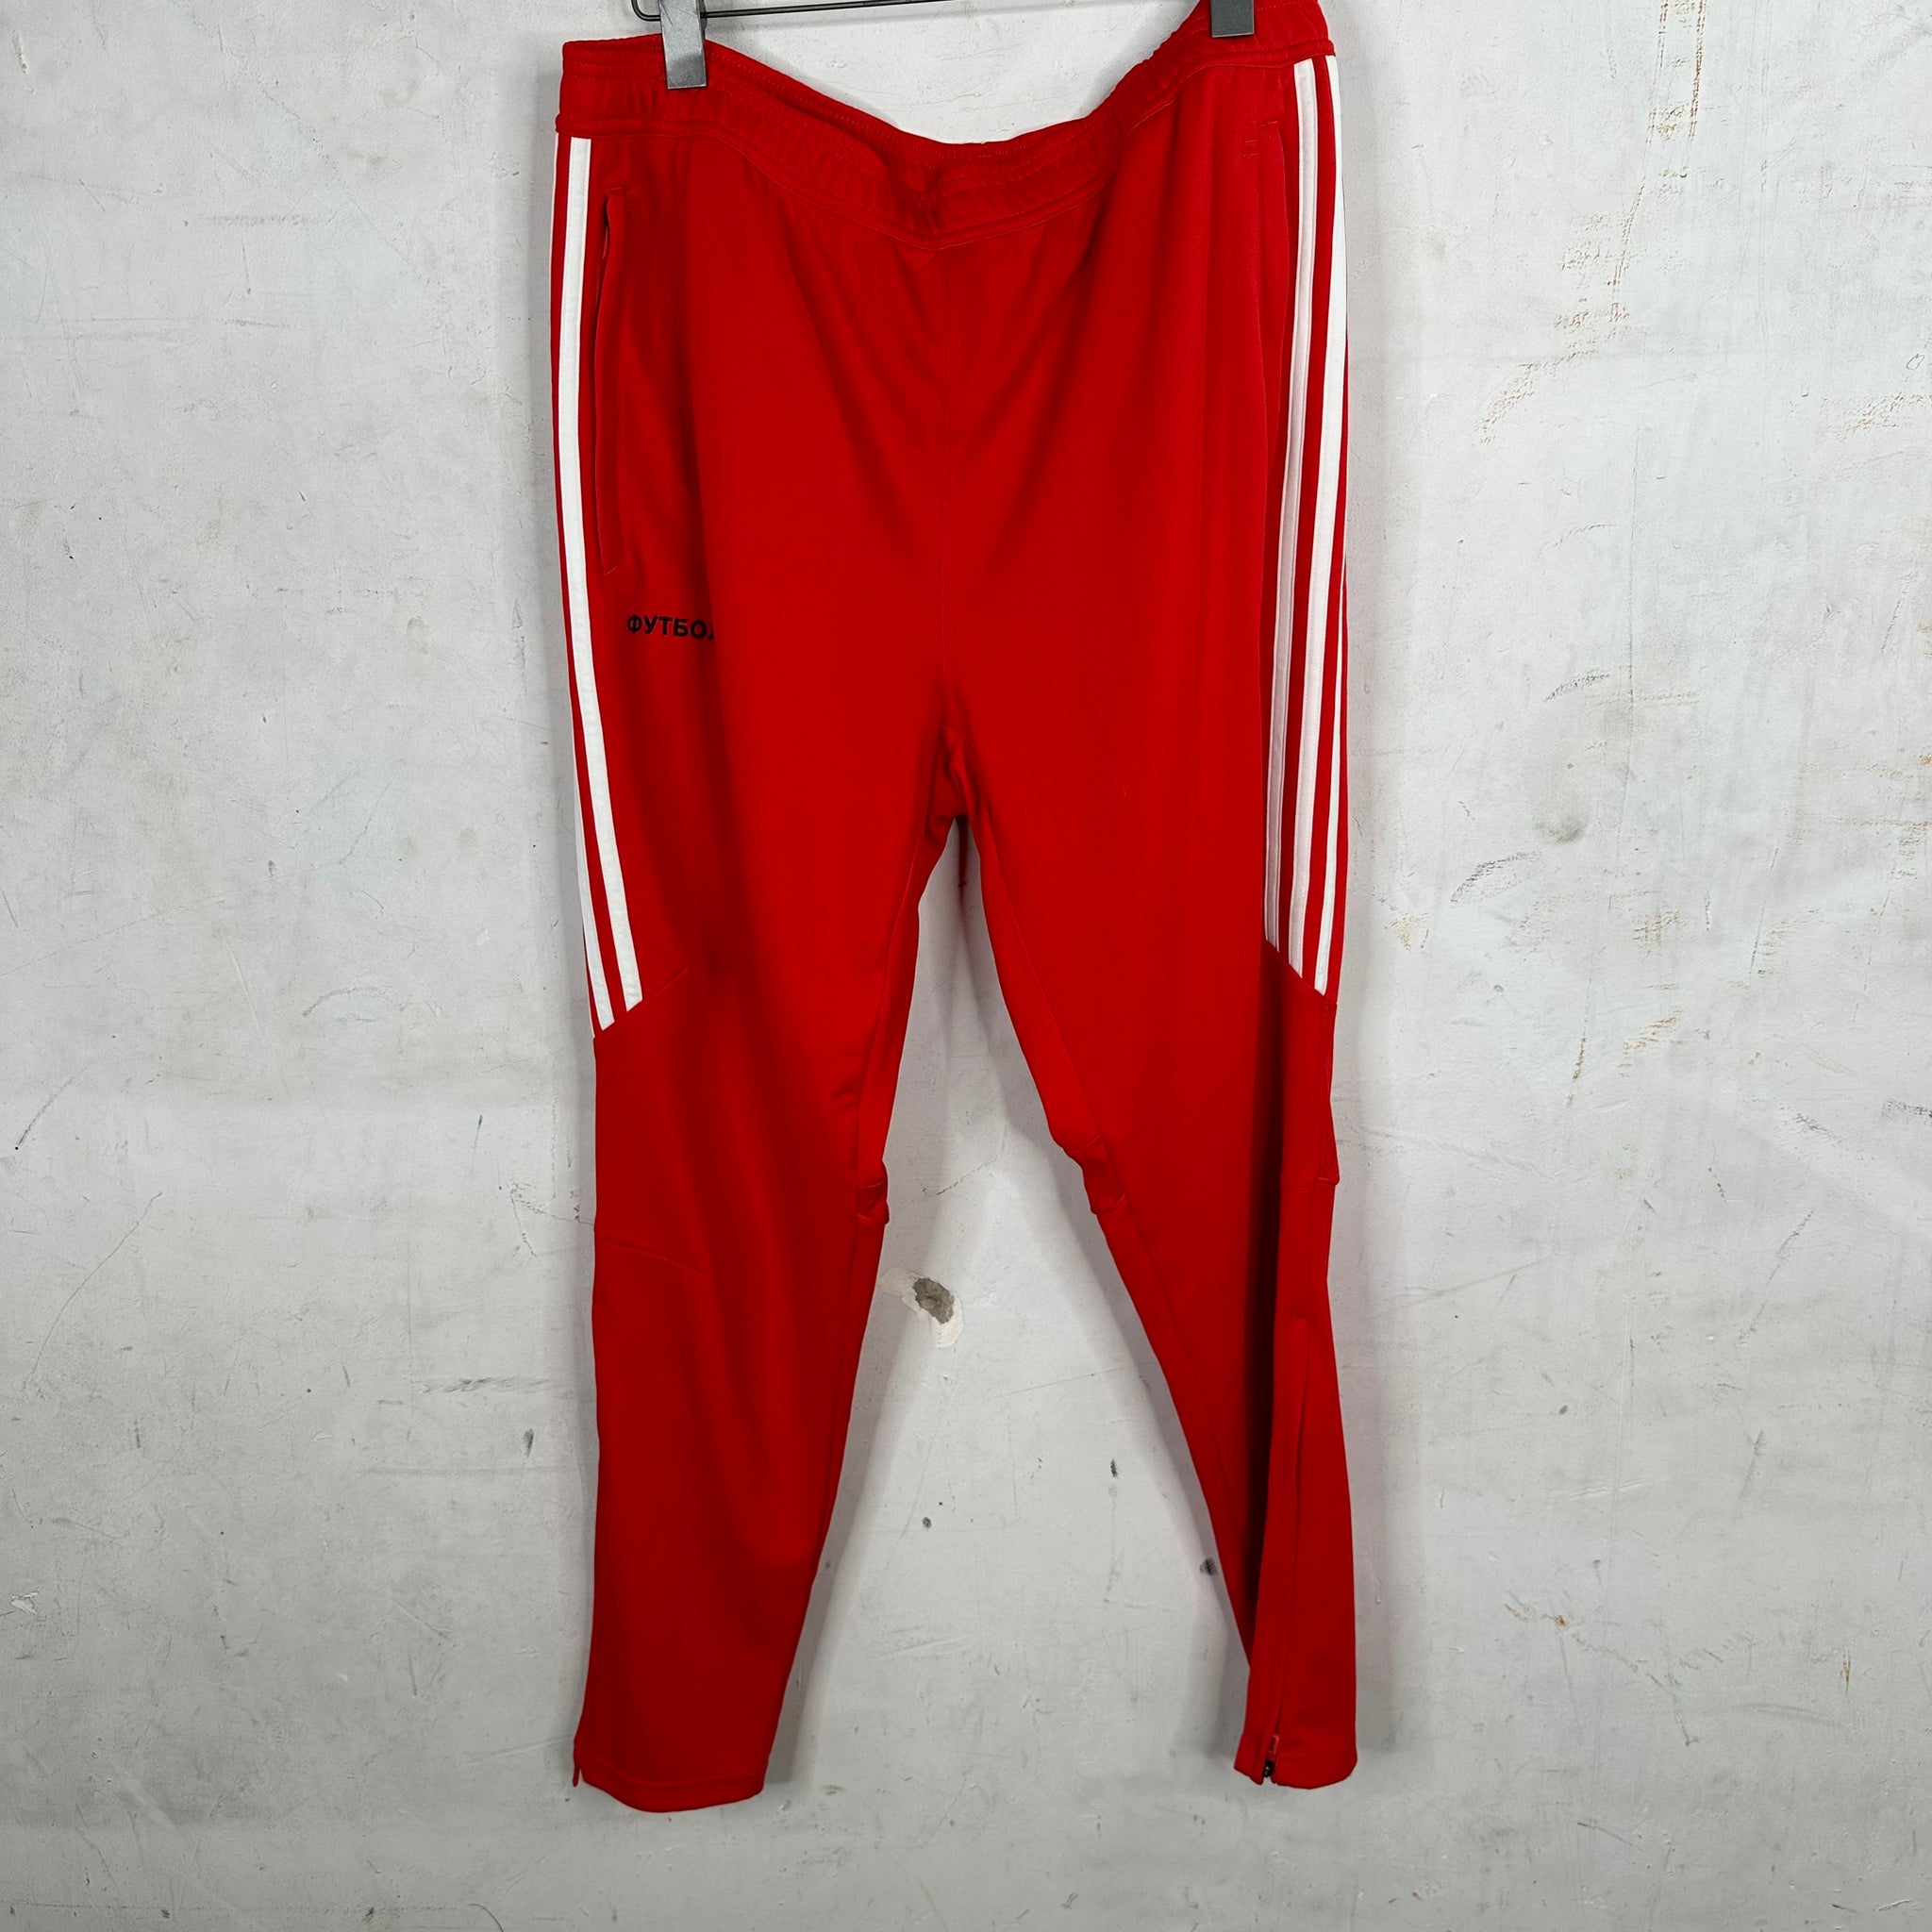 Gosha Rubchinskiy x Adidas Red Track Trousers